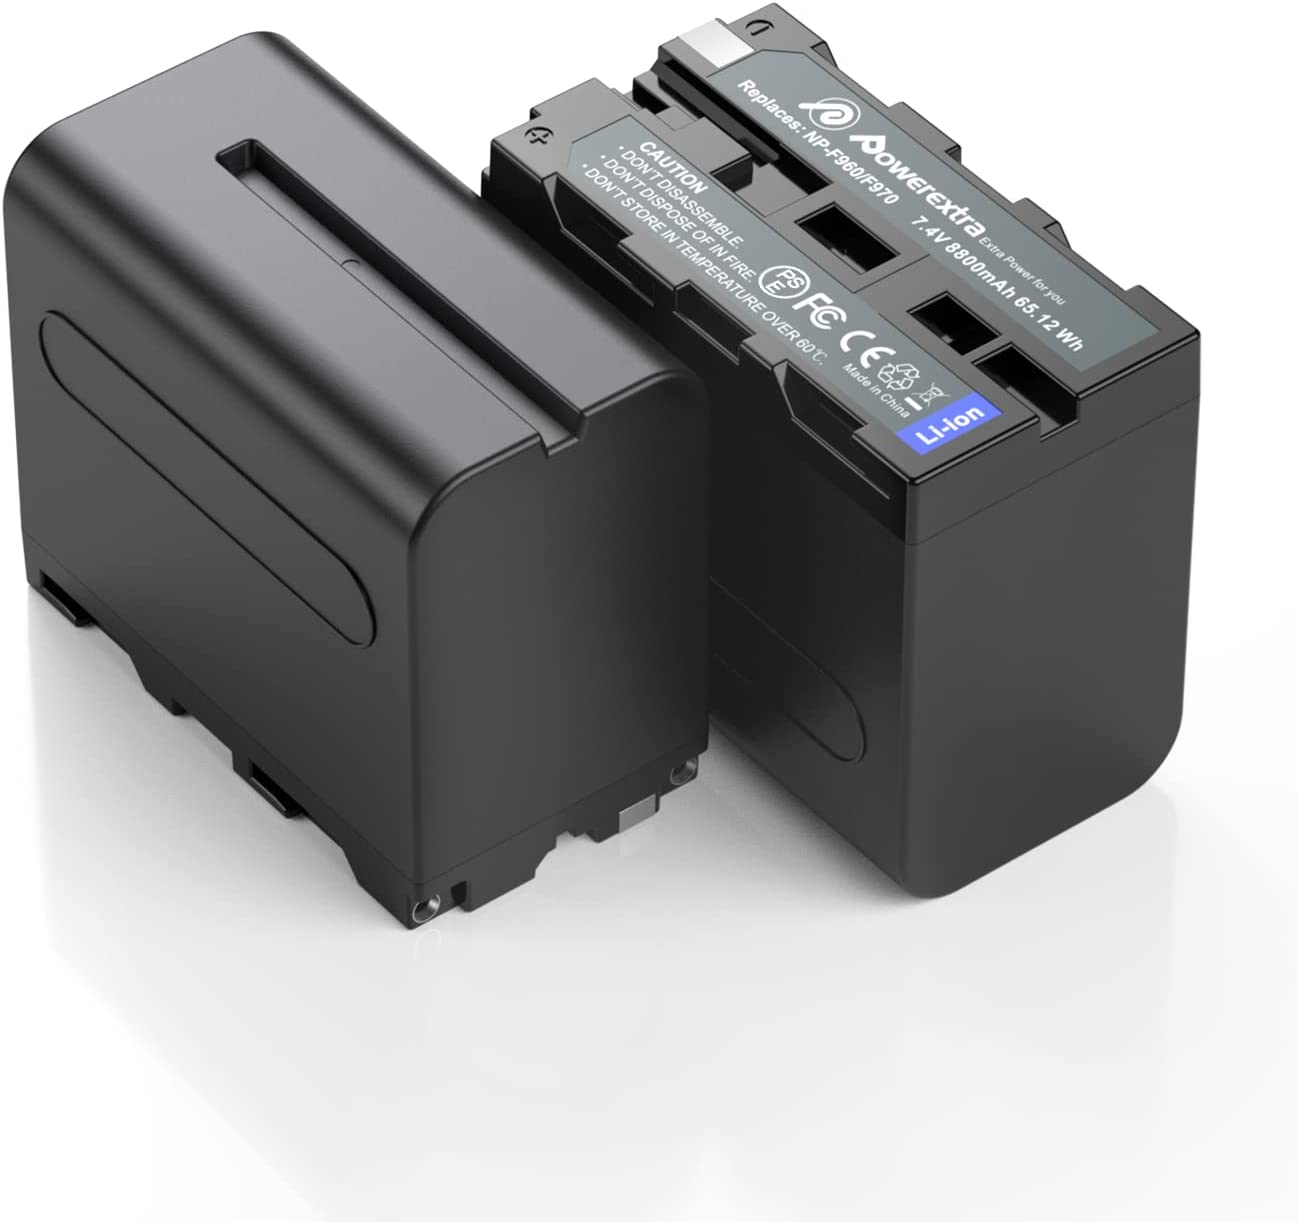 Powerextra NP-F970 Batteries(set of 8) main image